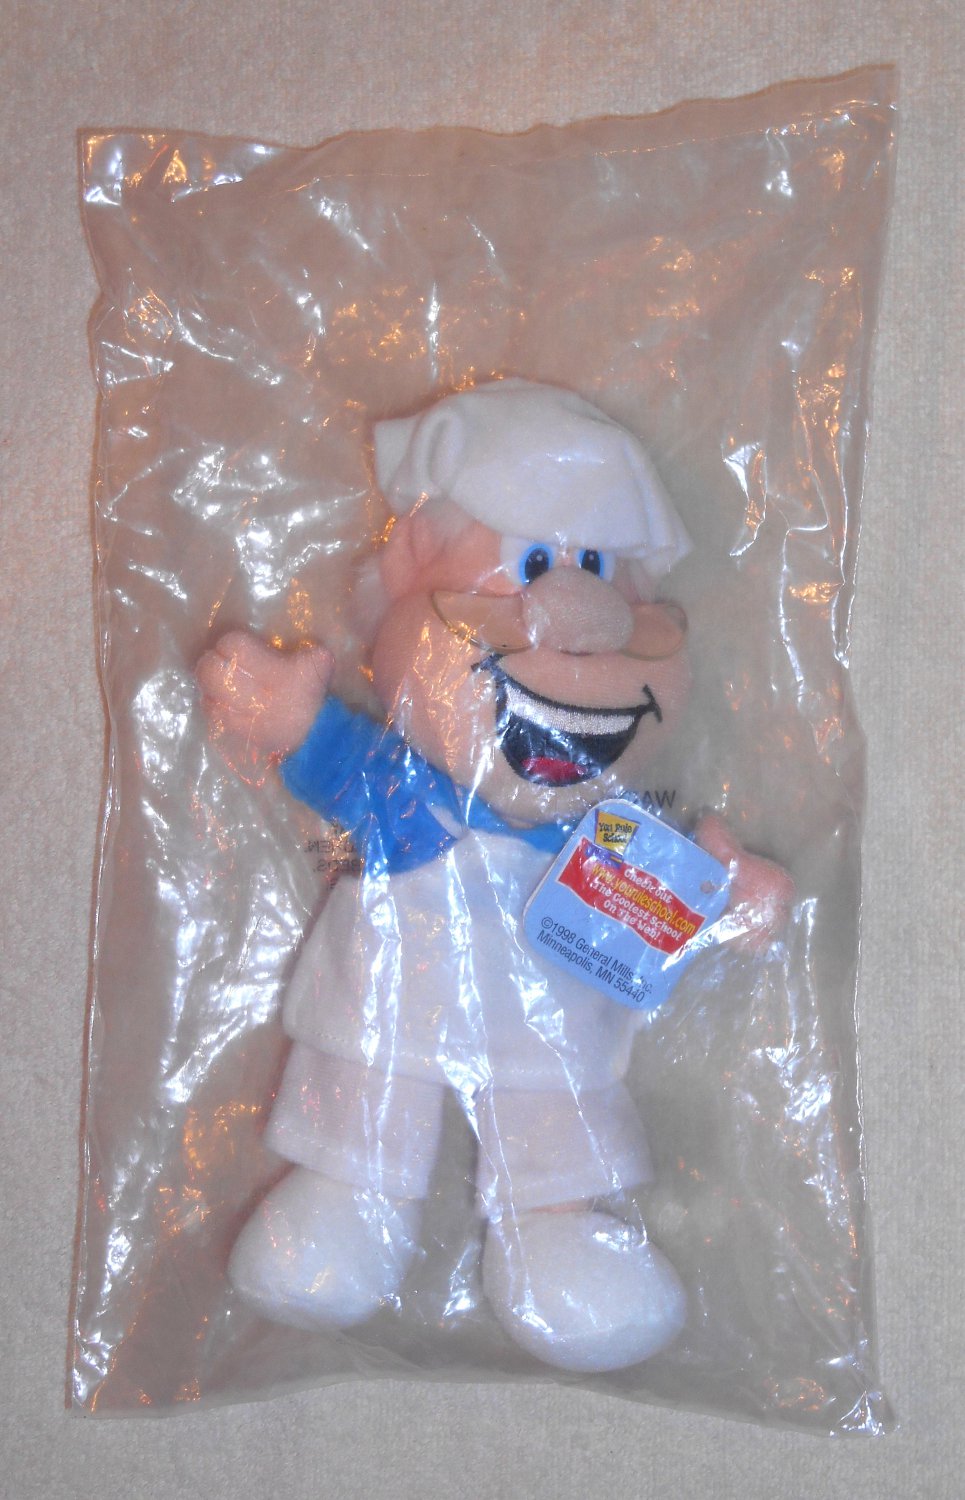 Wendell the Baker 9 Inch Beanbag Plush Doll Toy NIB Big G Breakfast Pals General Mills 1998